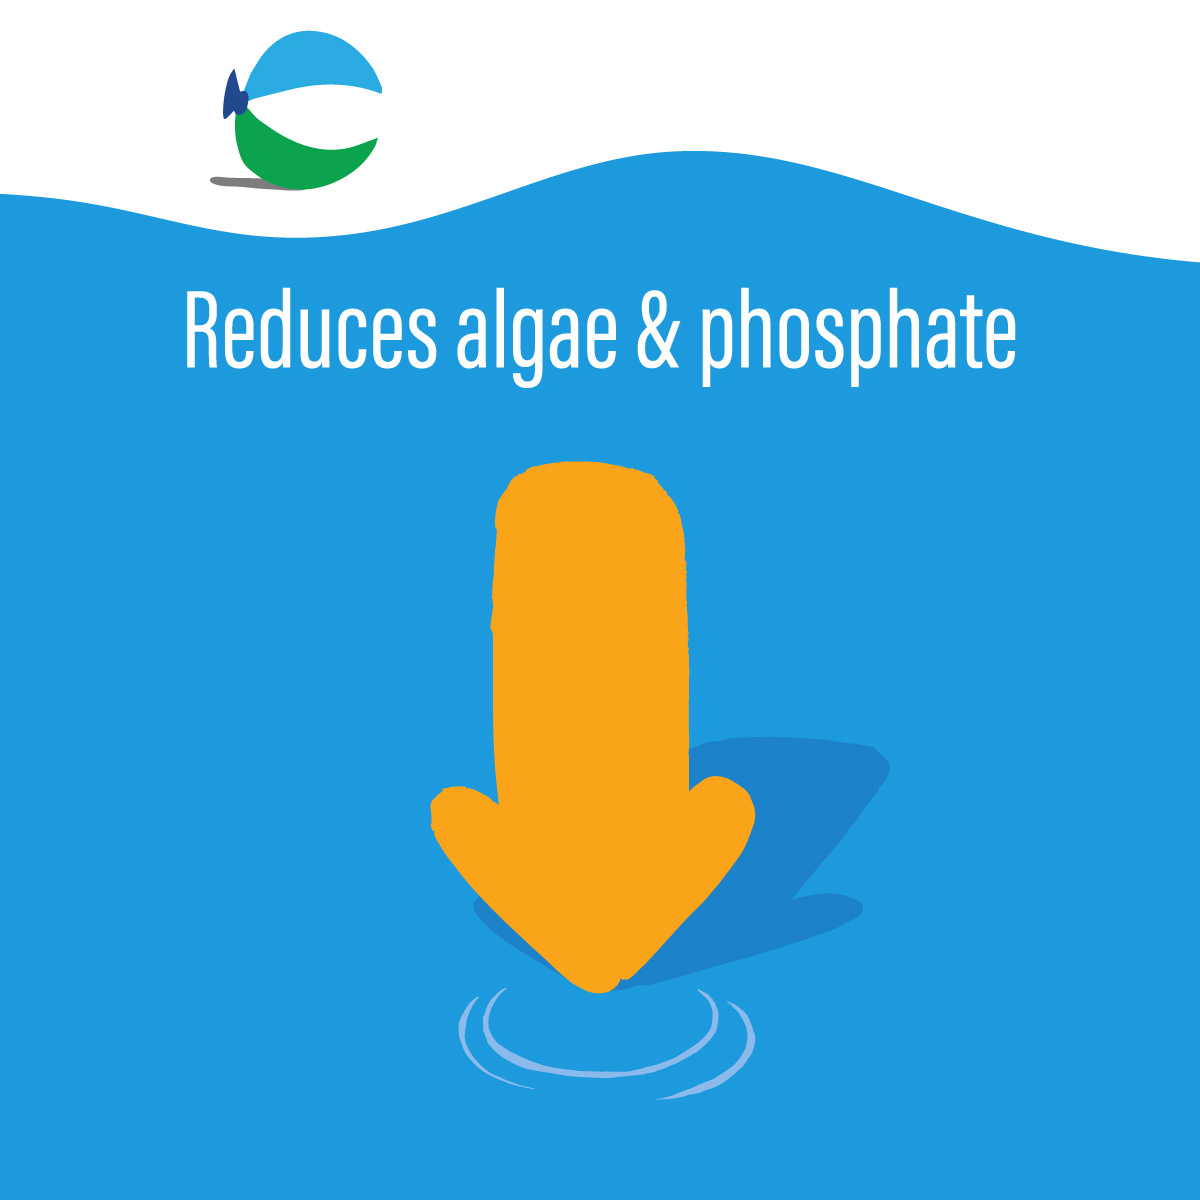 Large downward arrow with claim saying "Reduces algae and phosphate"